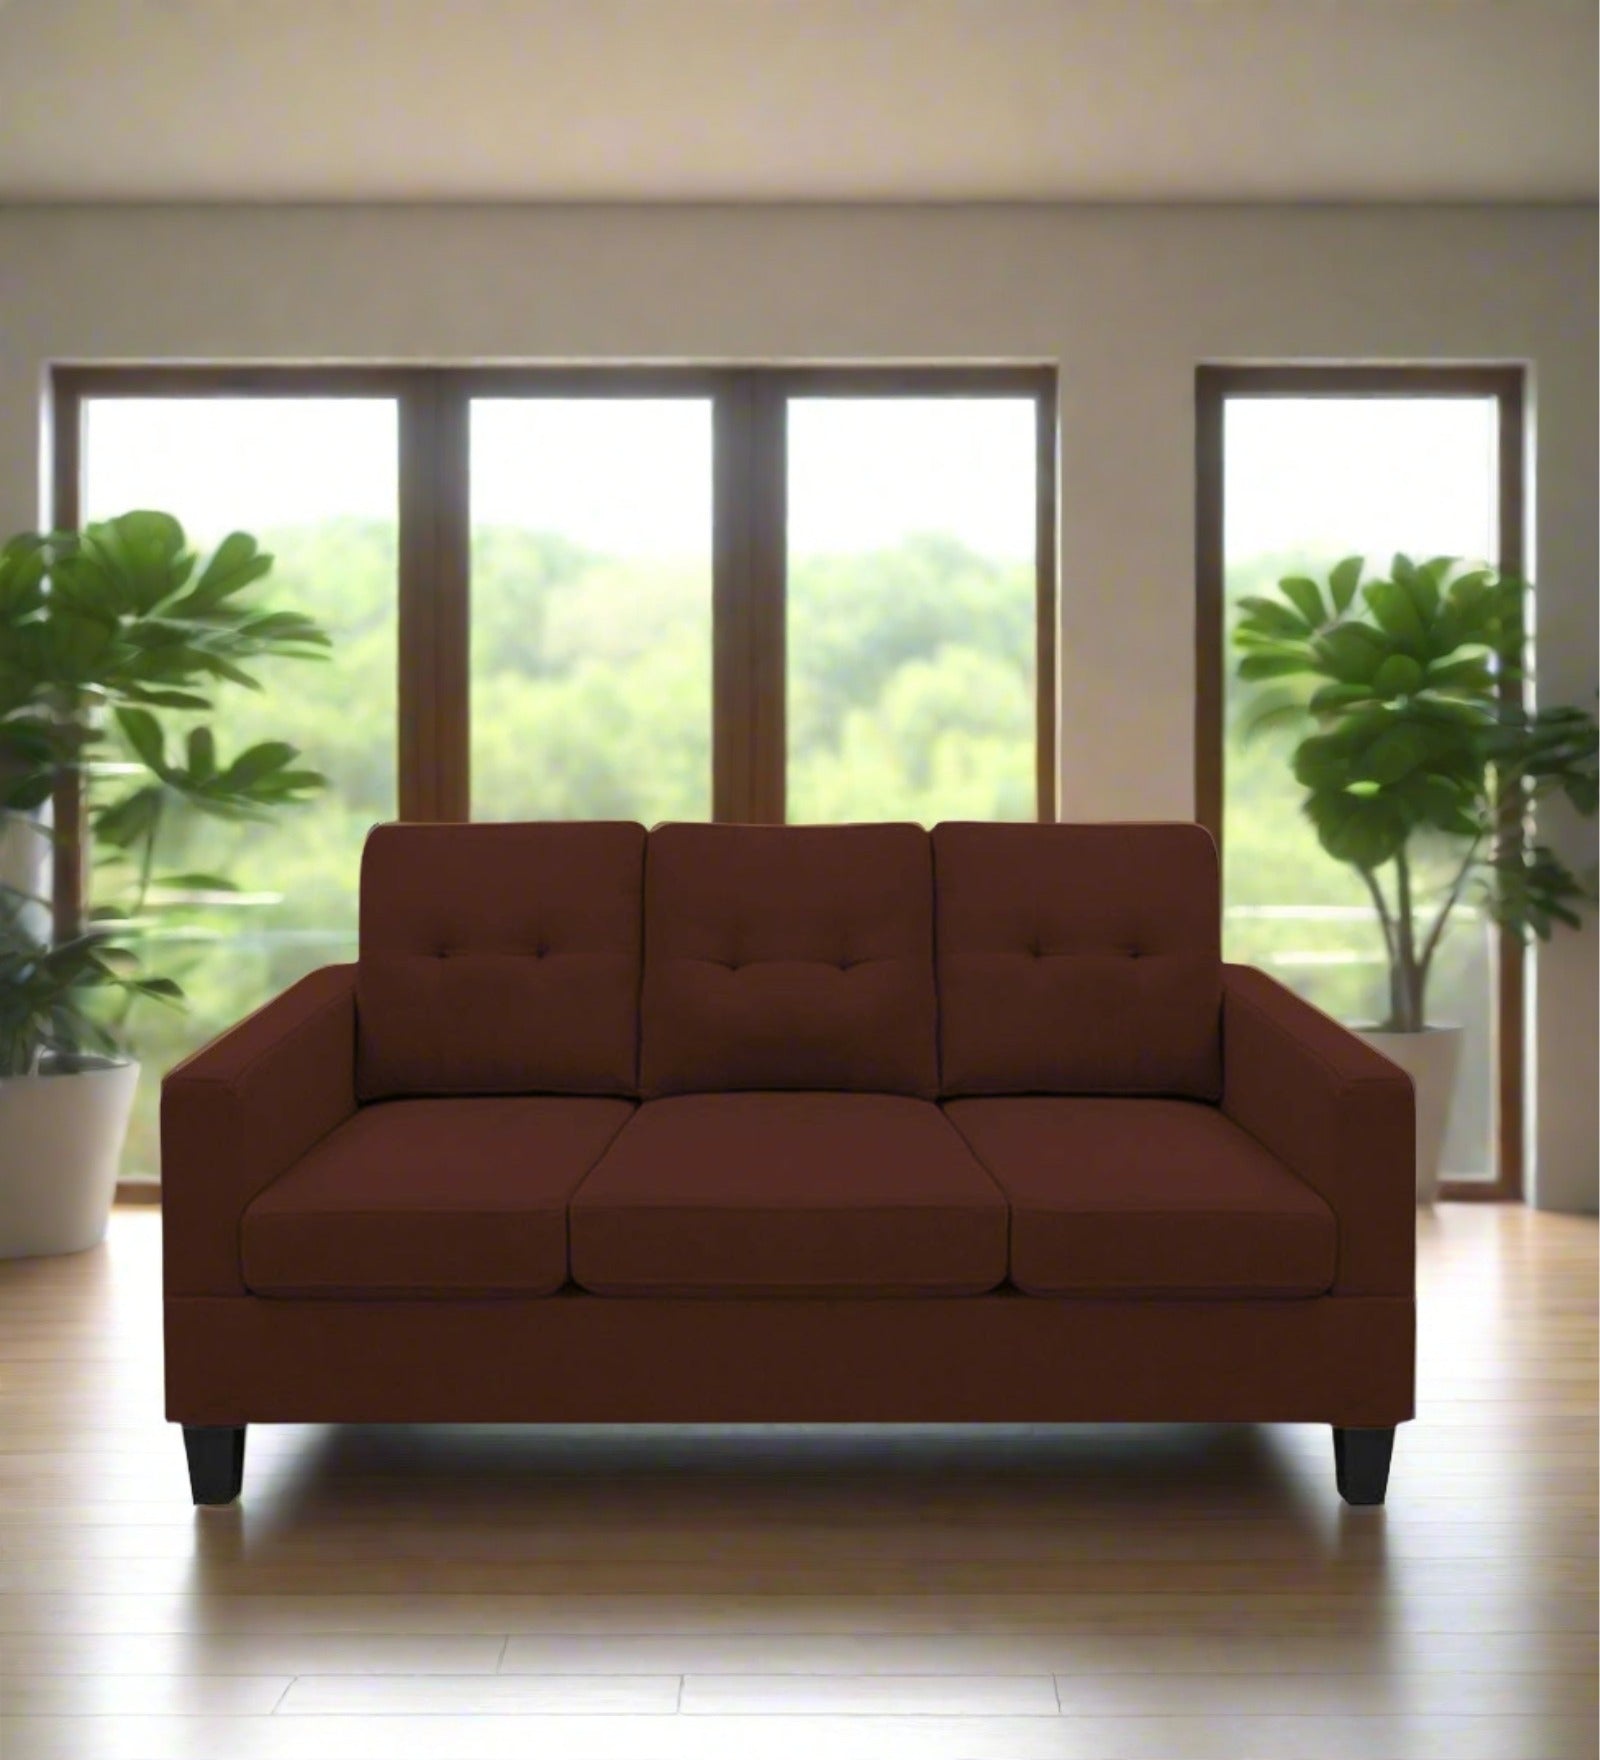 Thomas Fabric 3 Seater Sofa in Coffee Brown Colour